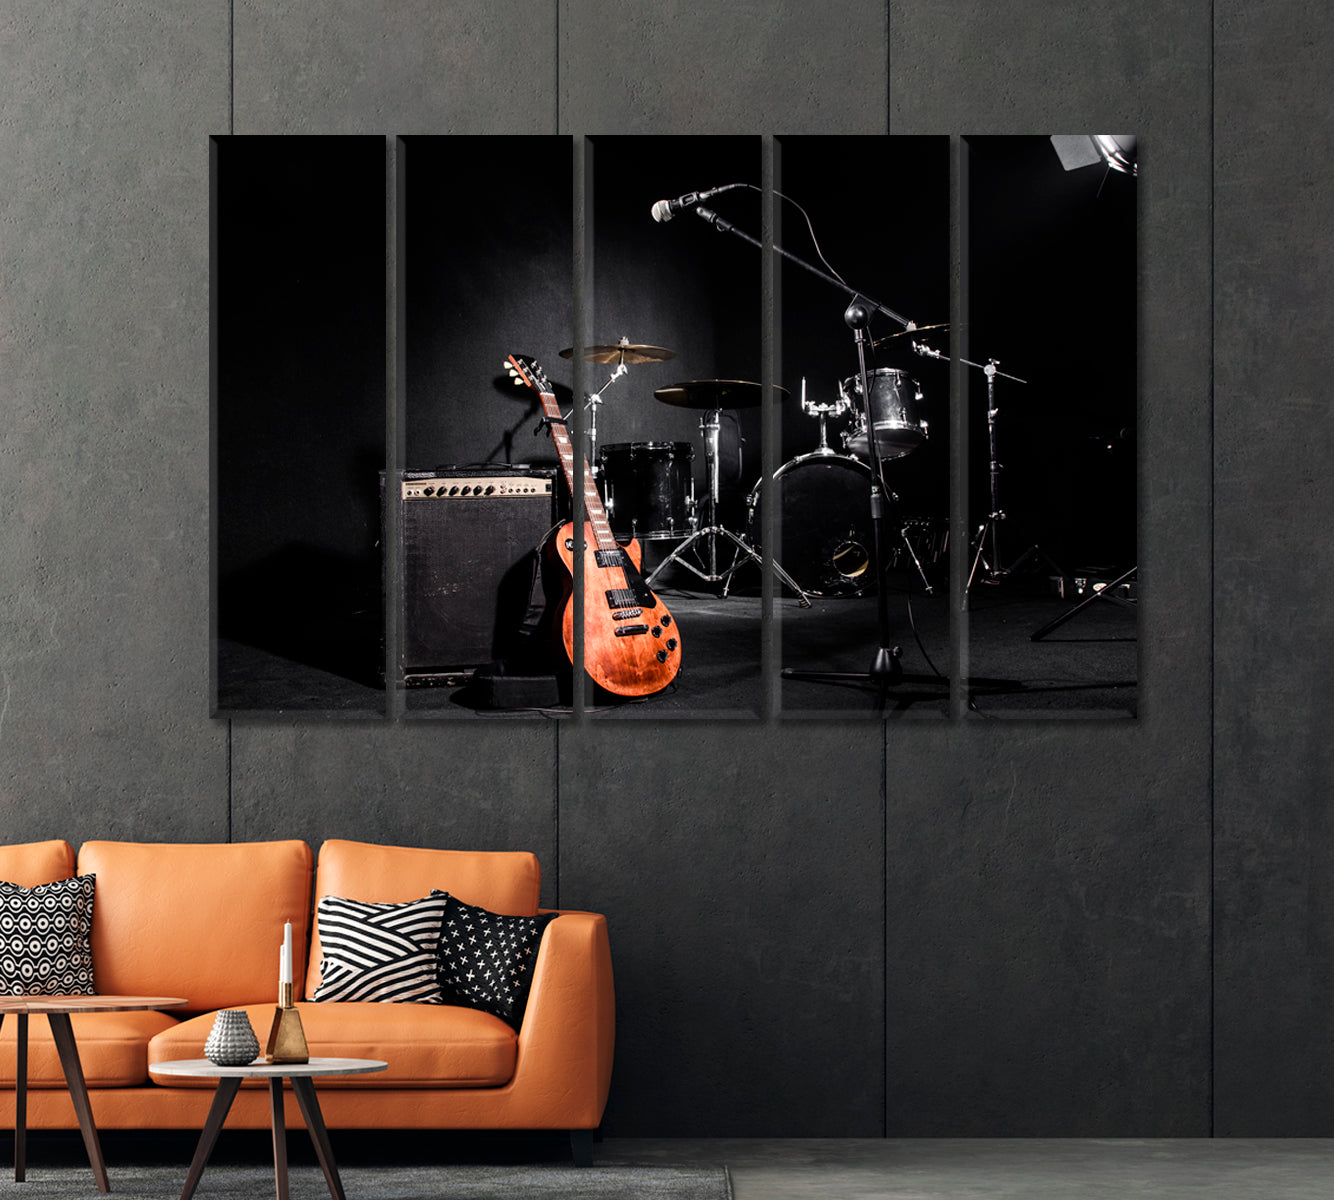 Set of Musical Instruments During Concert Canvas Print-Canvas Print-CetArt-1 Panel-24x16 inches-CetArt